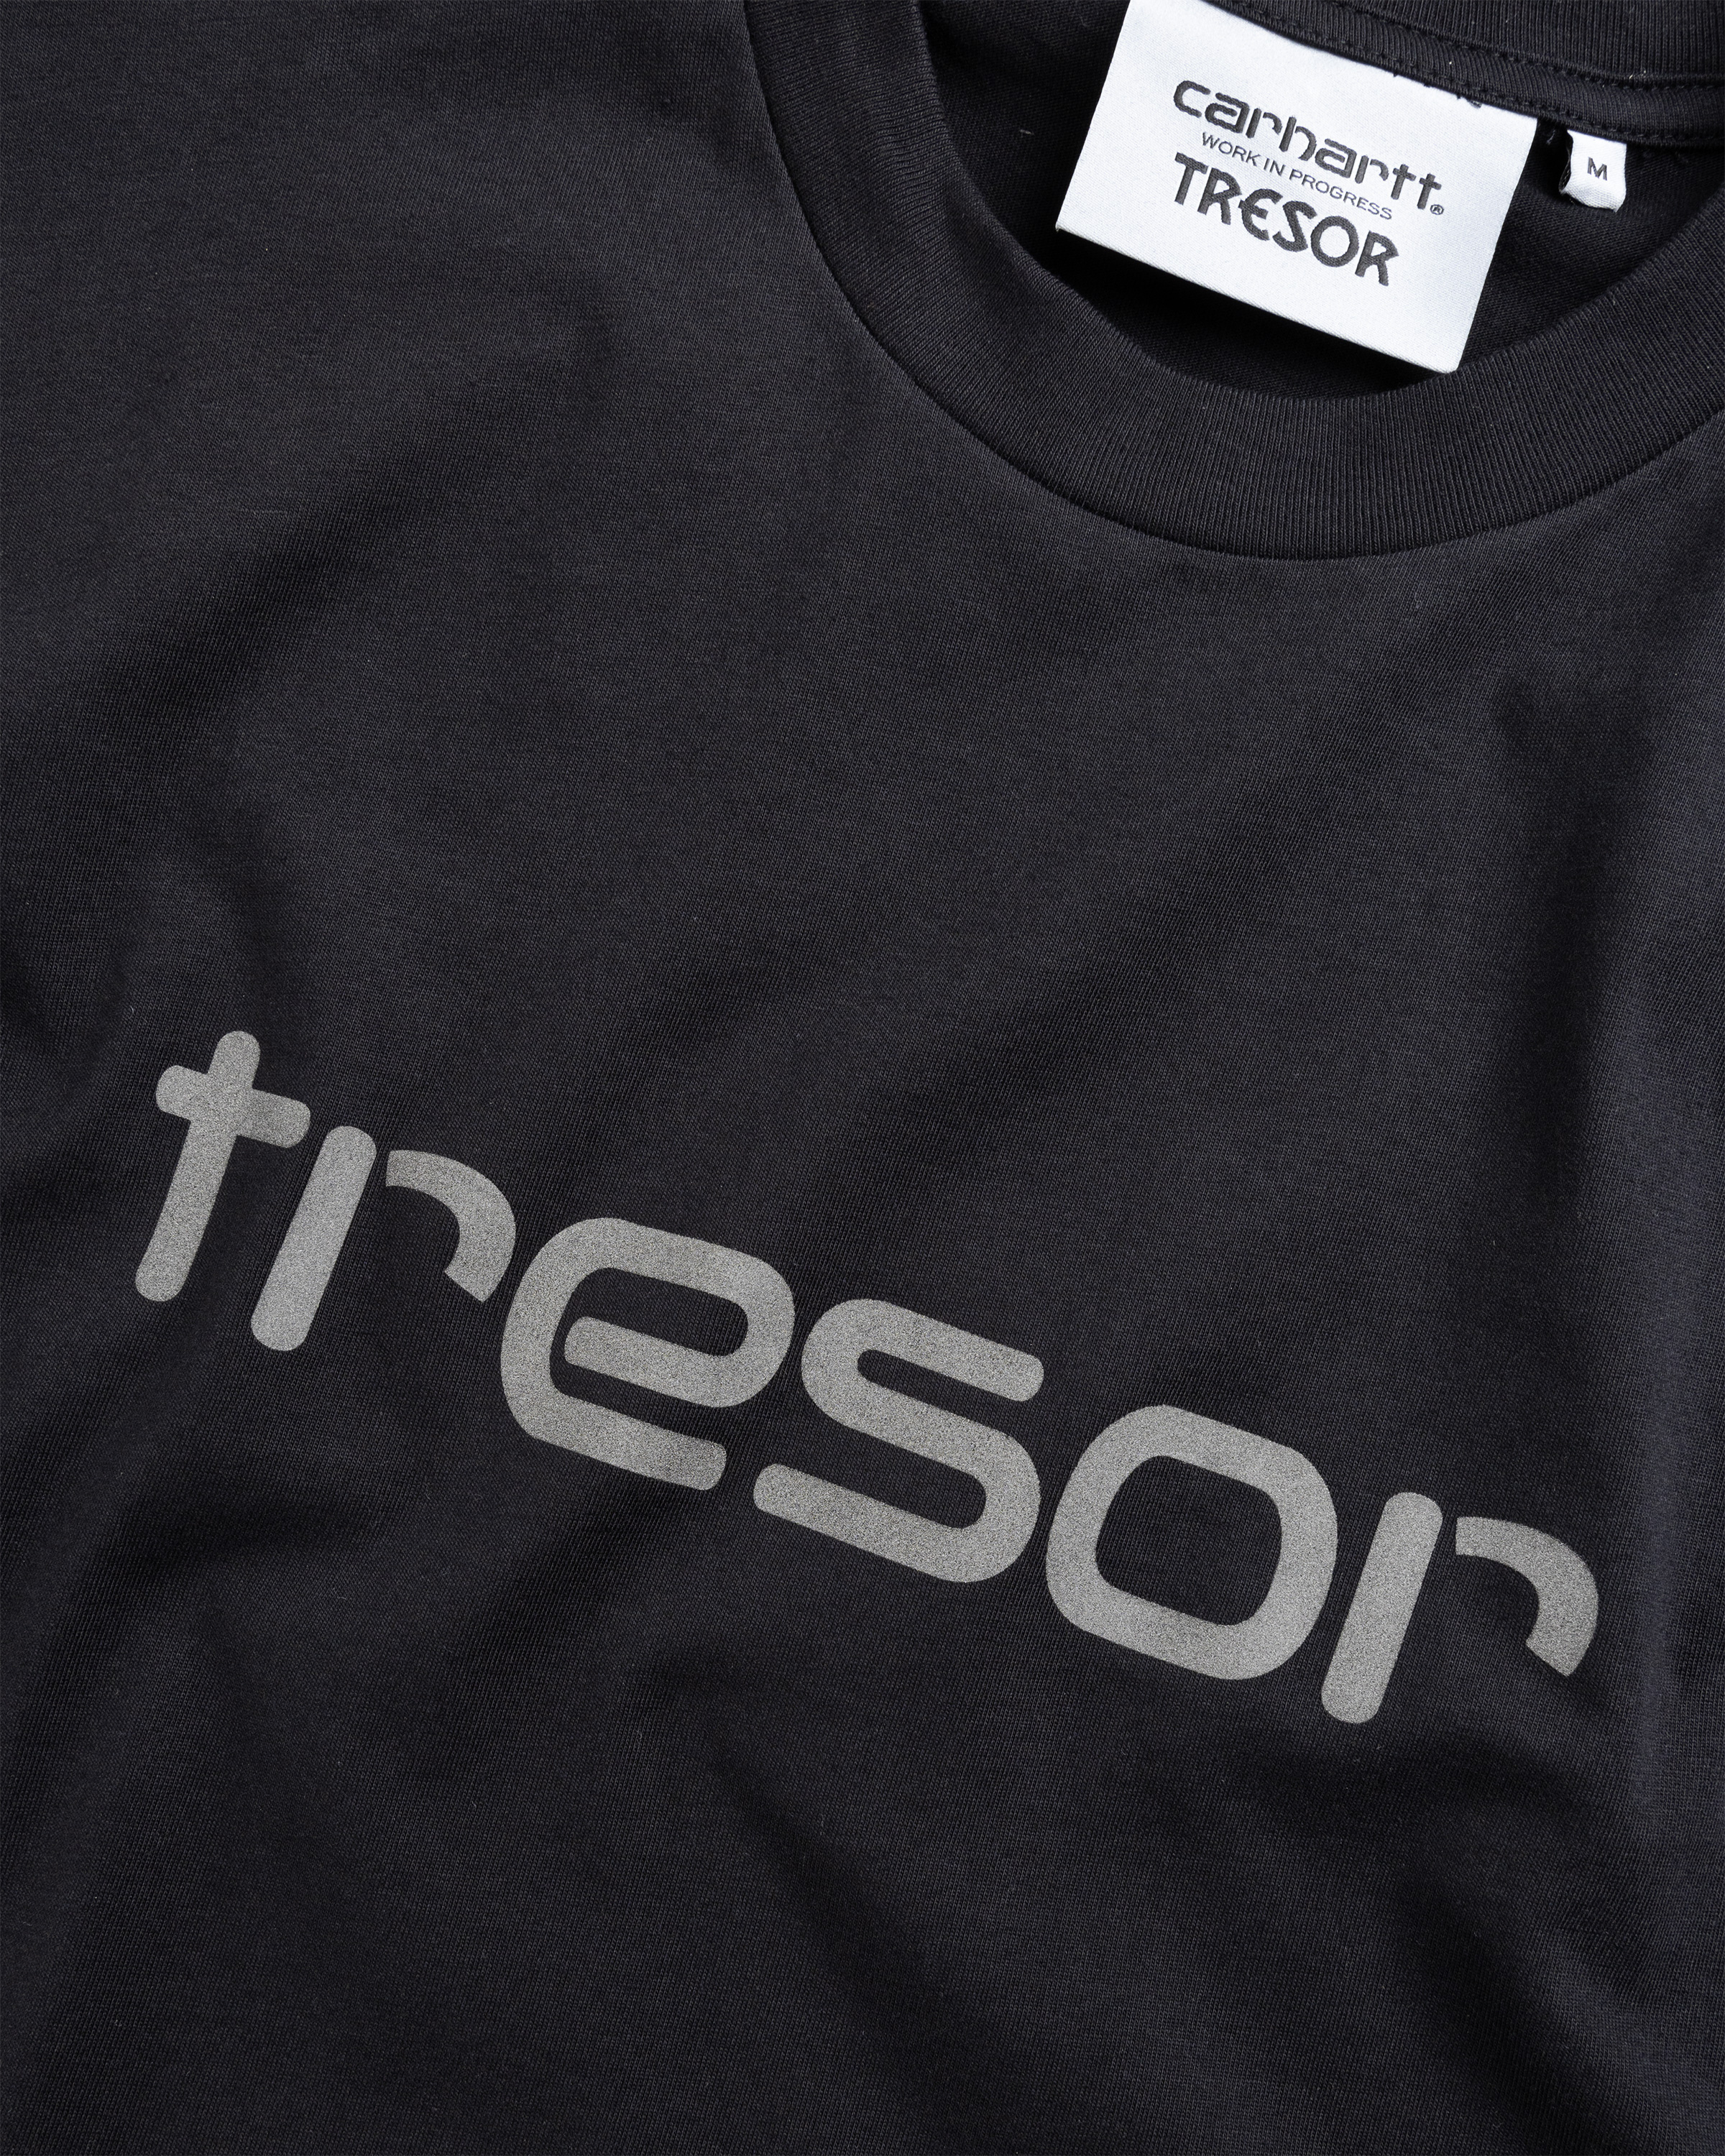 Carhartt WIP x Tresor – Techno Alliance S/S T-Shirt Black/Dark Grey Reflective - Tops - Black - Image 6